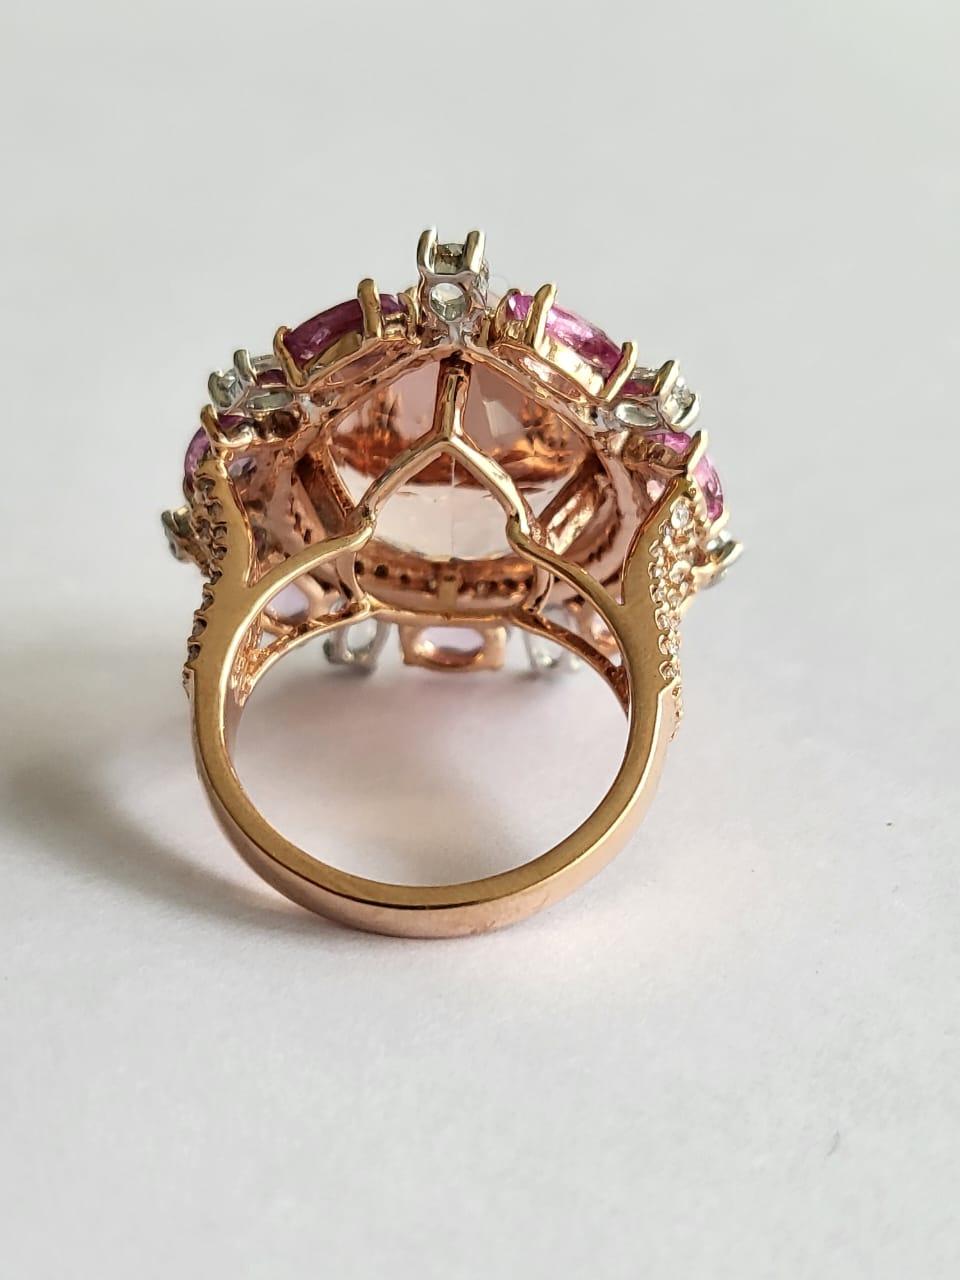 Modern Set in 18k Gold, 11.13 Carats Morganite, Pink Sapphires & Diamonds Cocktail Ring